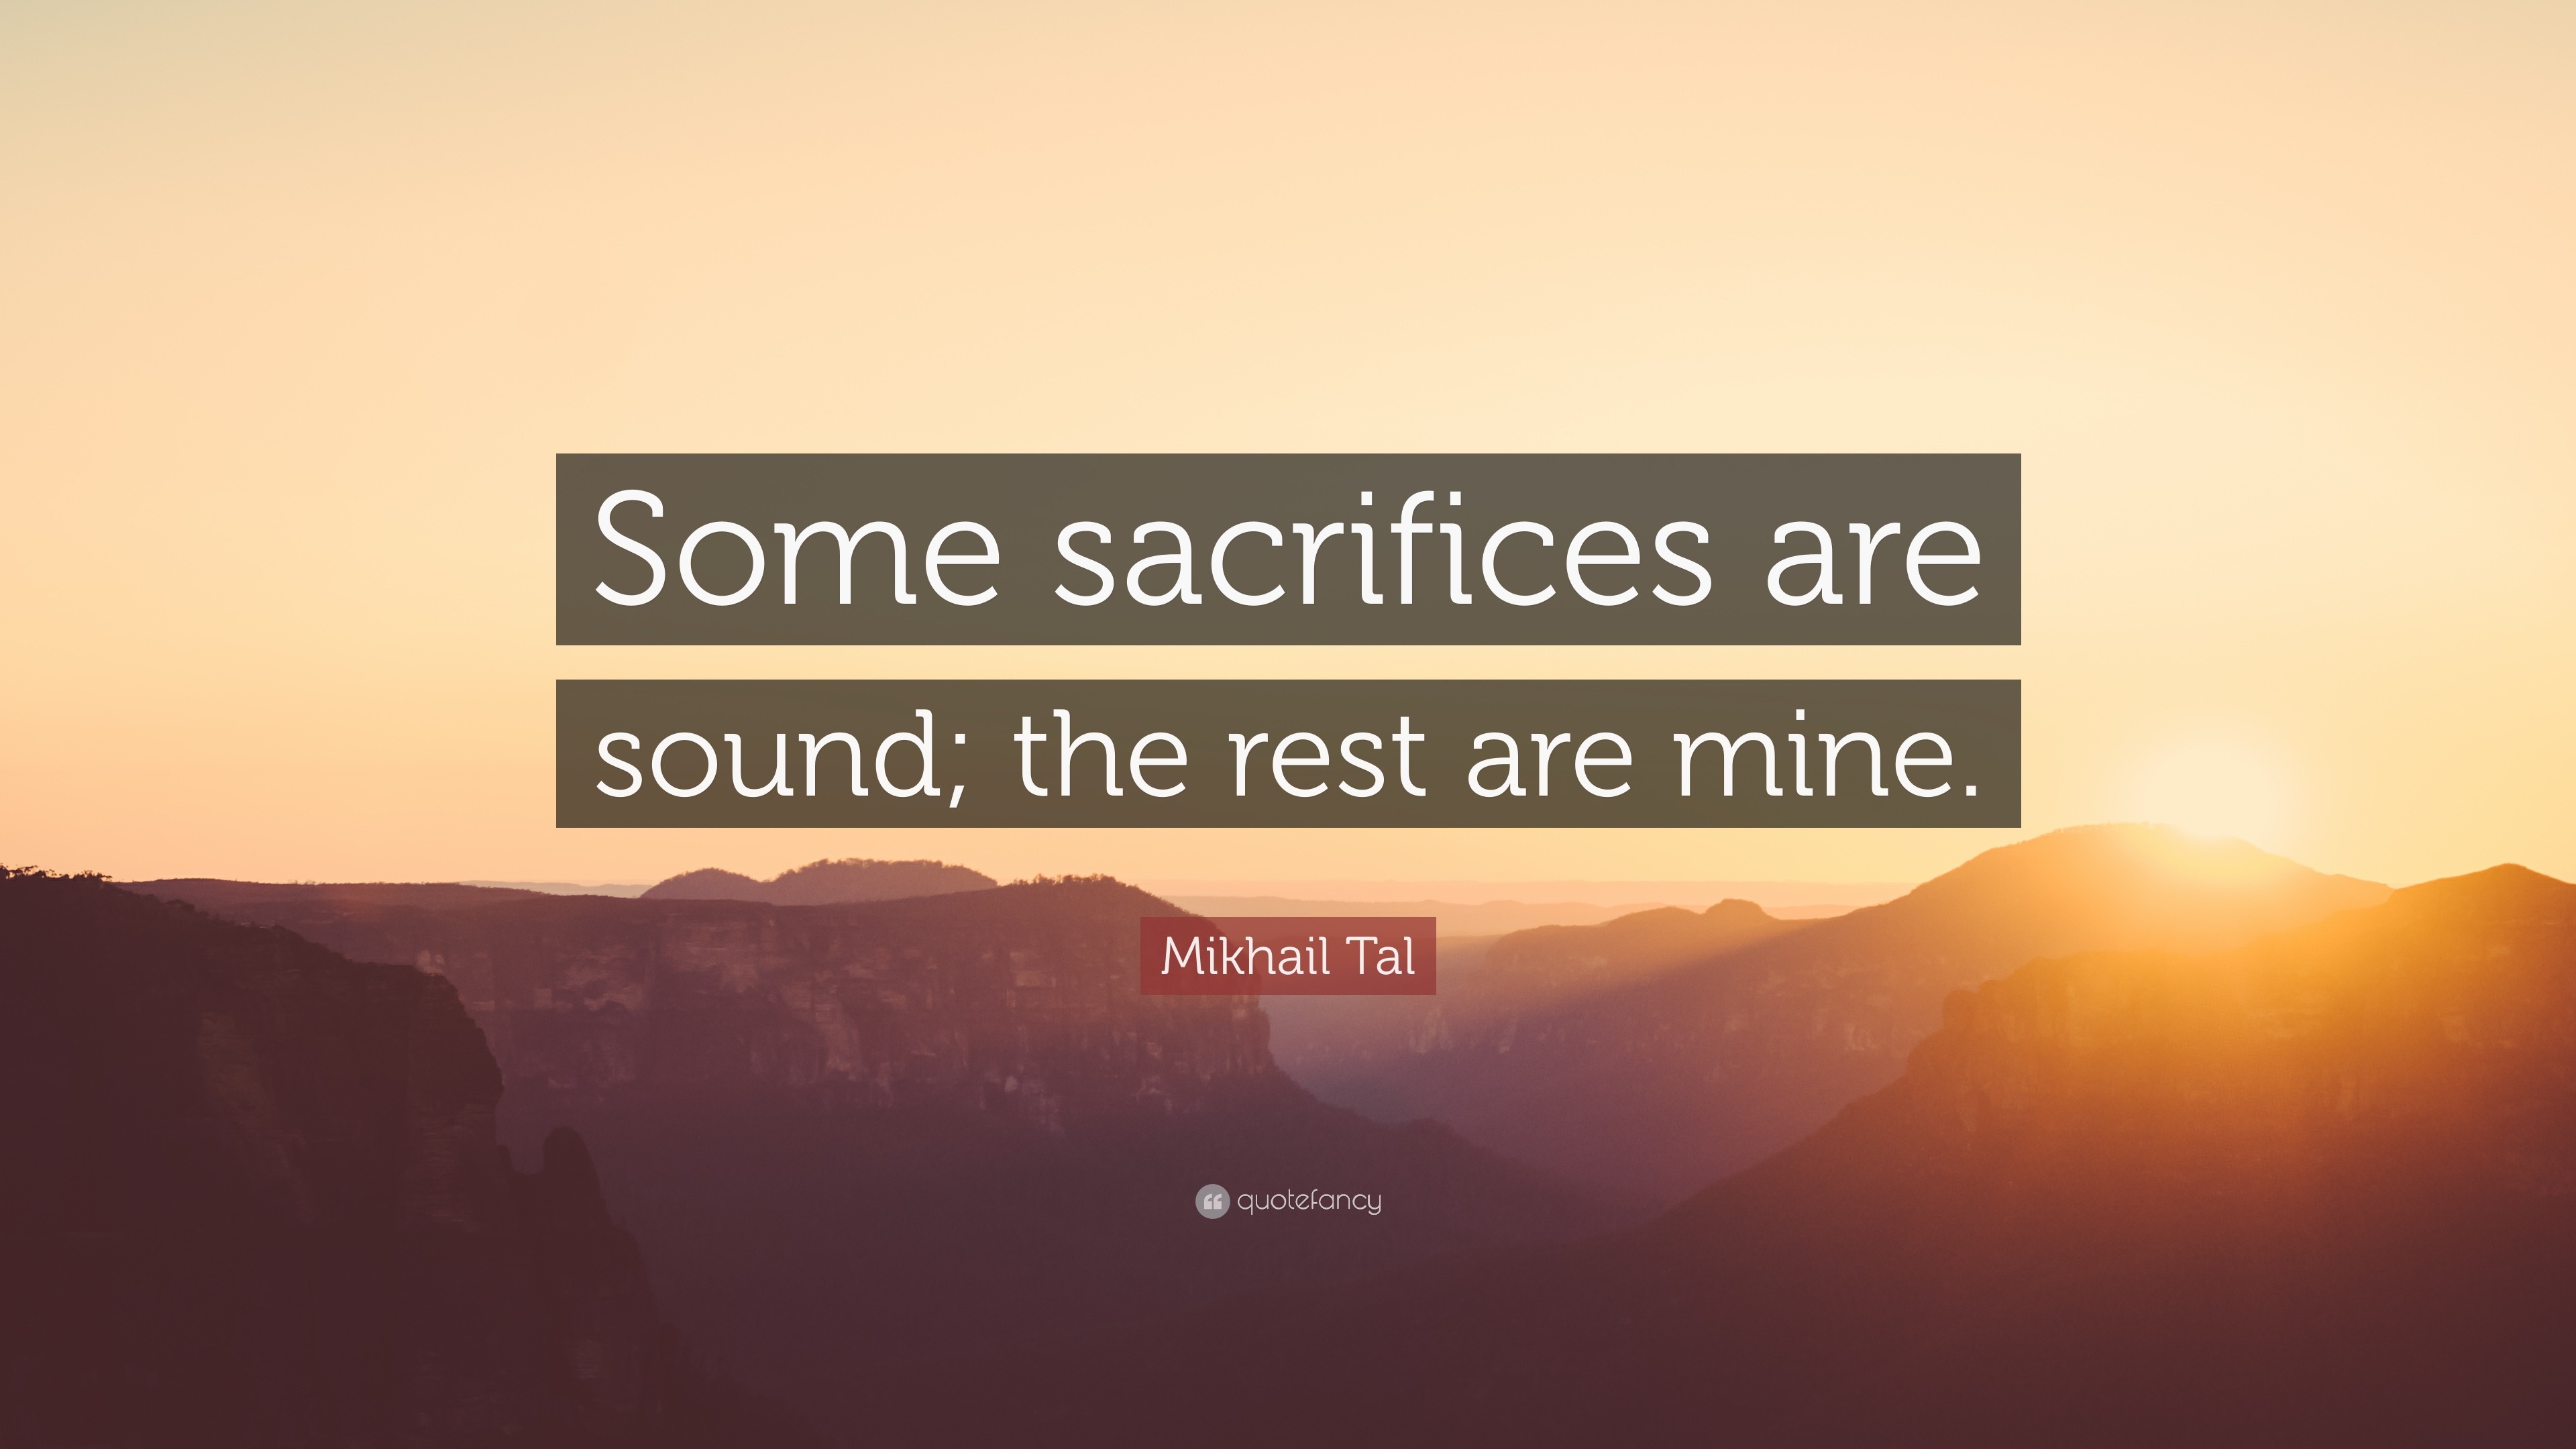 Mikhail Tal Quotes - IdleHearts